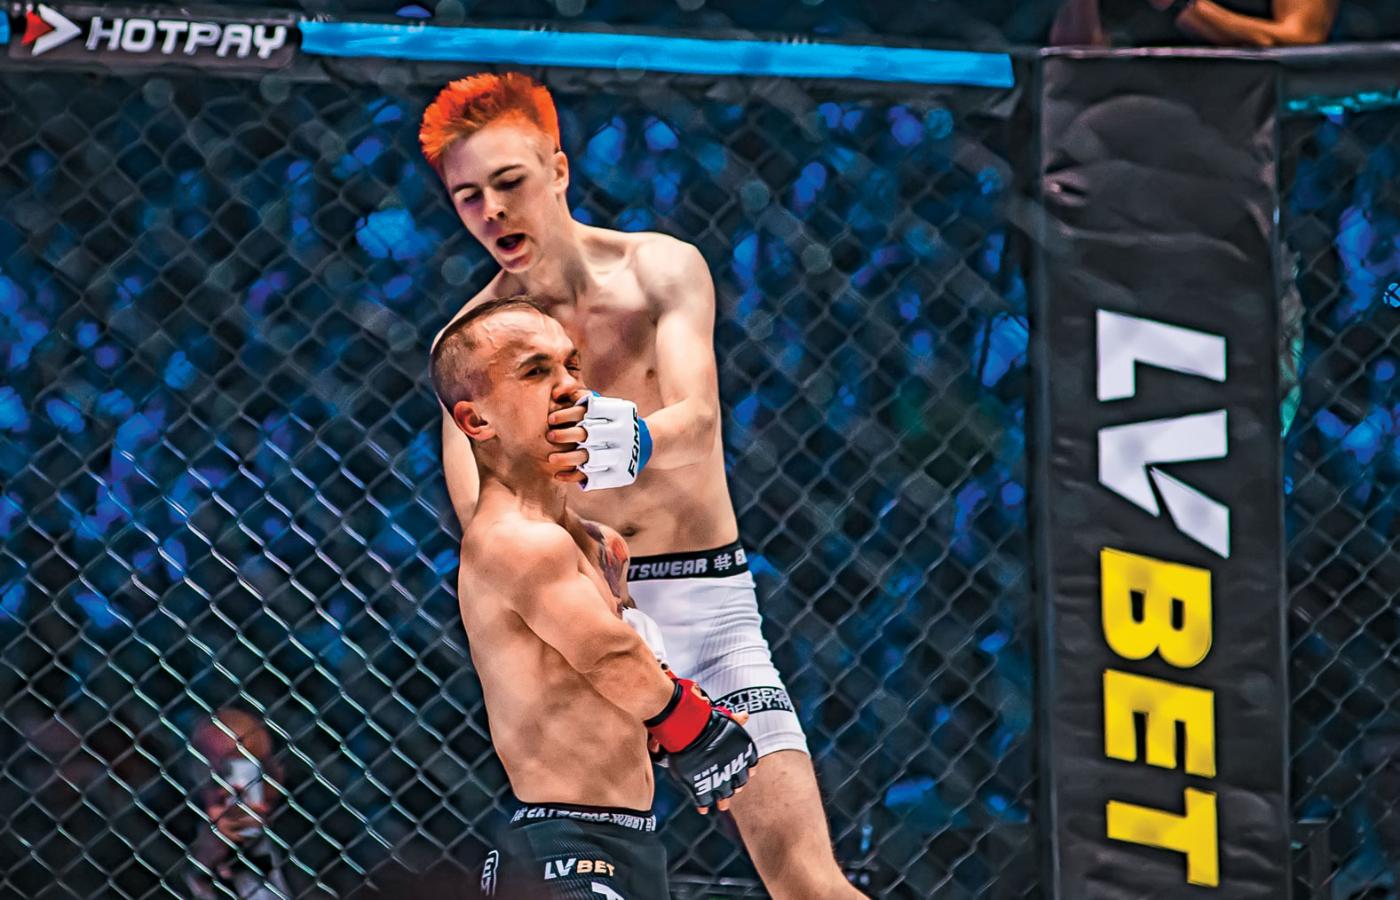 Gdańsk, 26.10.2019 r., gala Fame MMA. Lord Kruszwil vs Mini Majk. Górą był Lord.